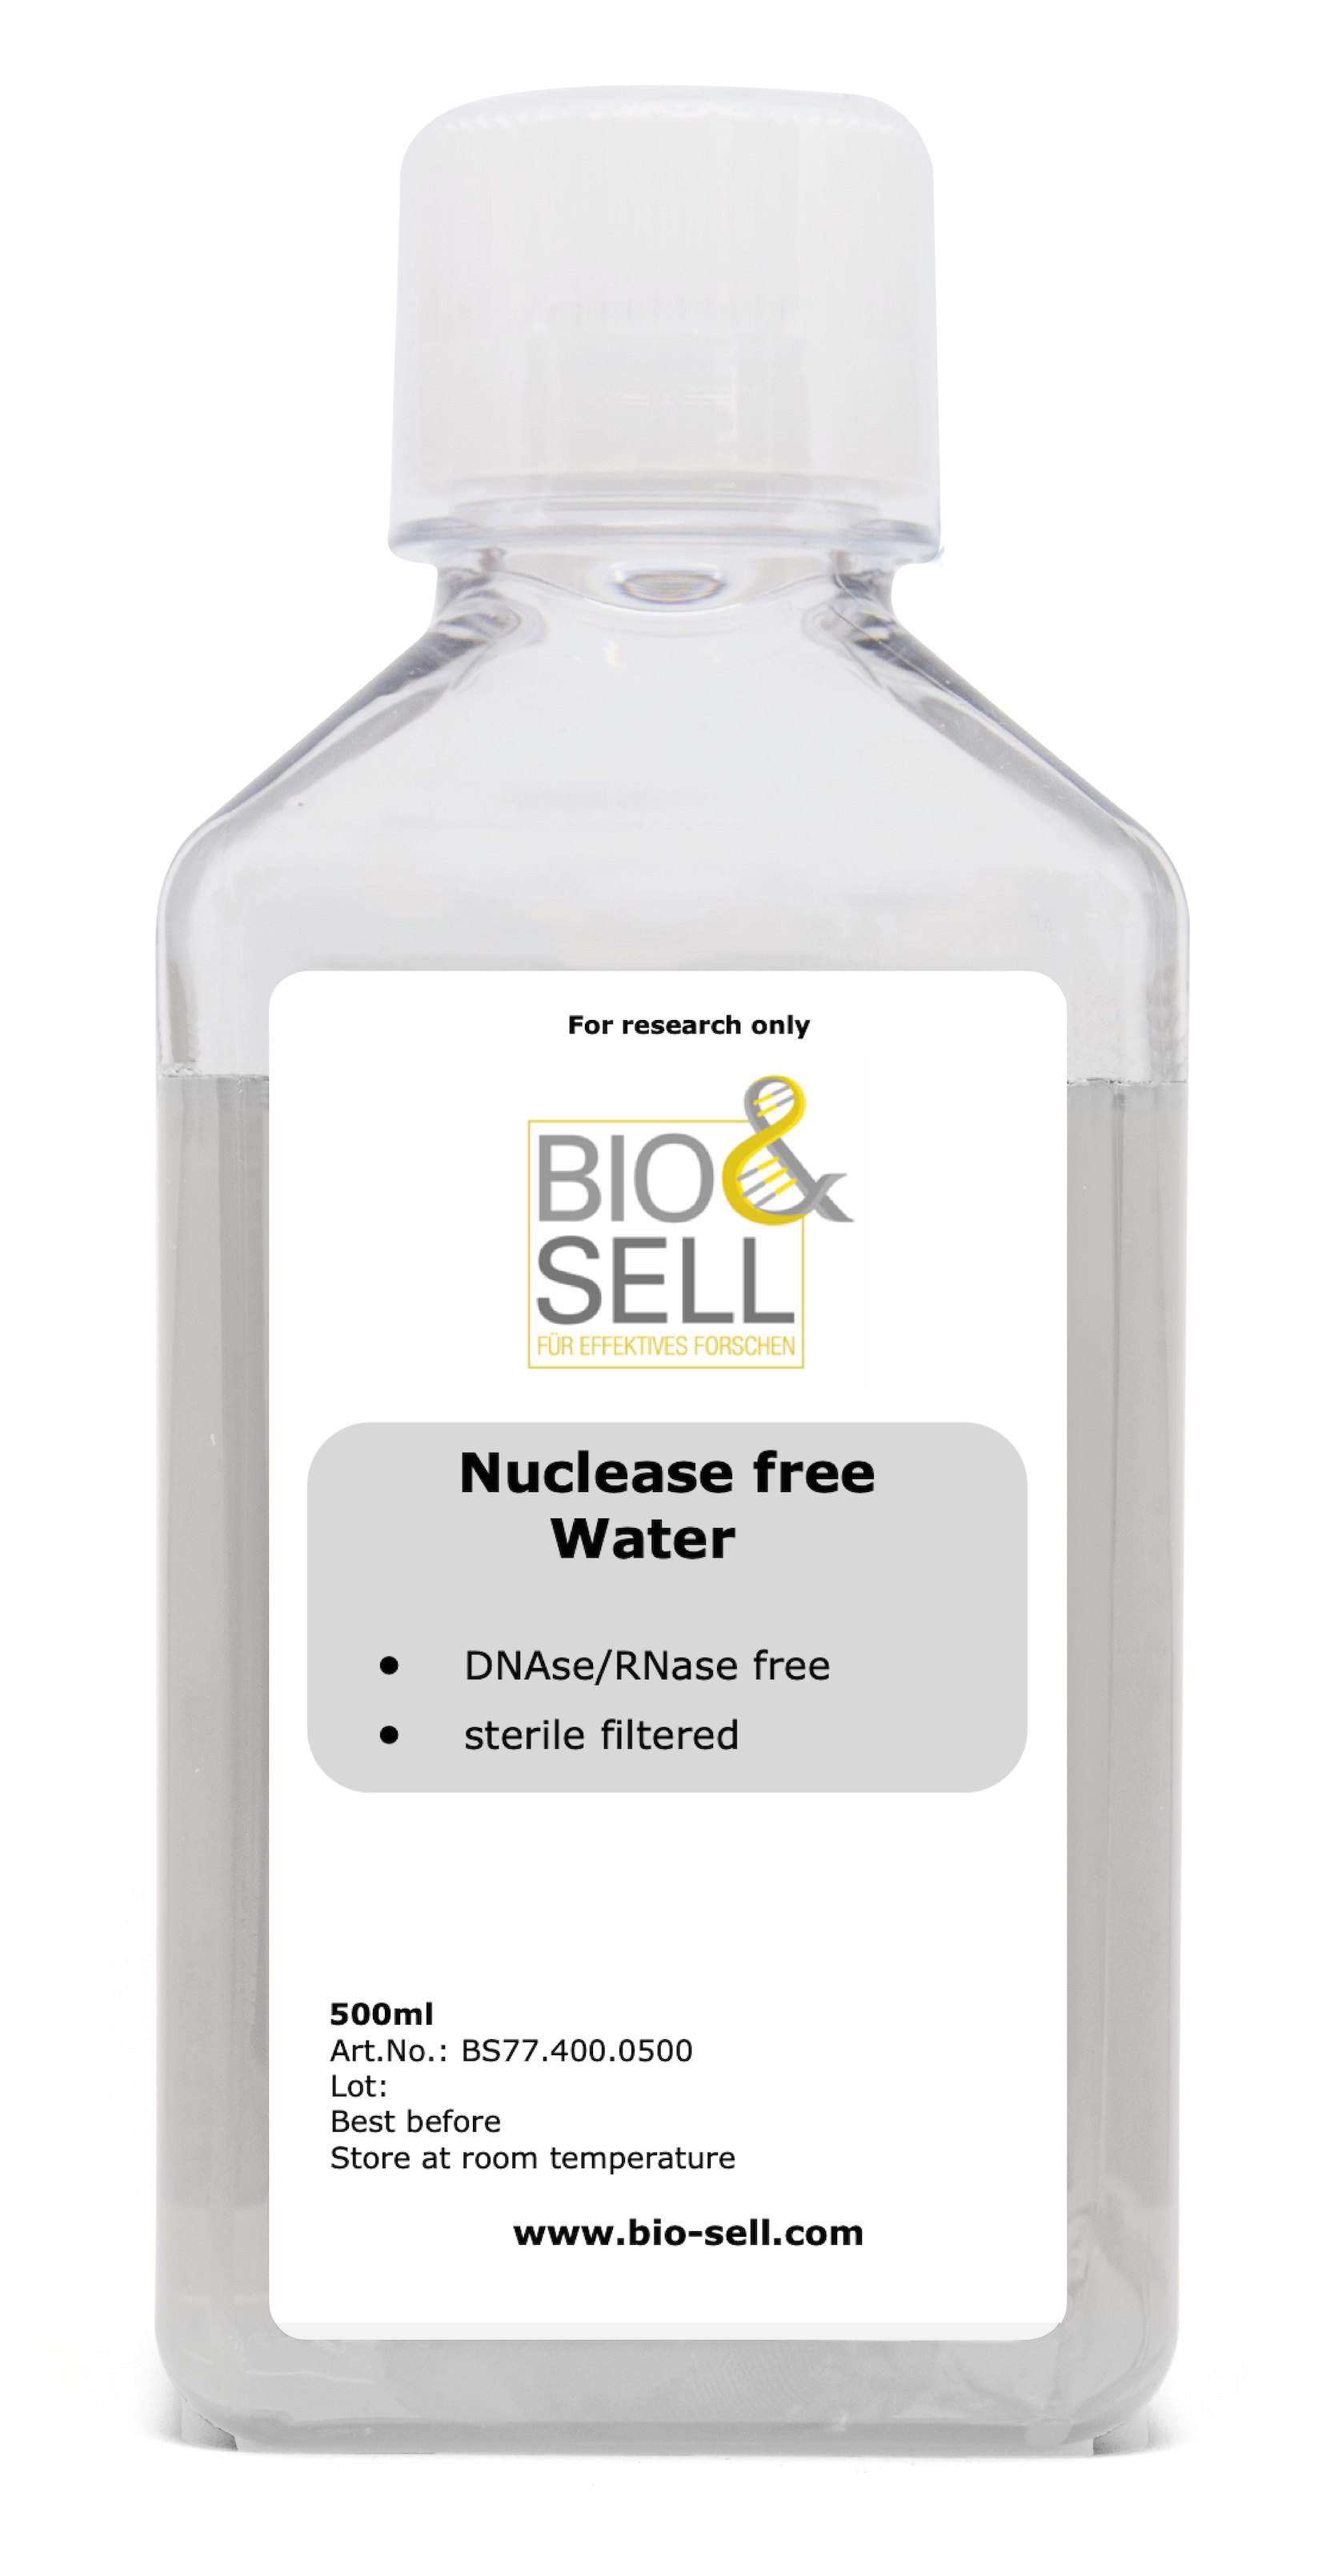 Nuklease freies Wasser BioSELL